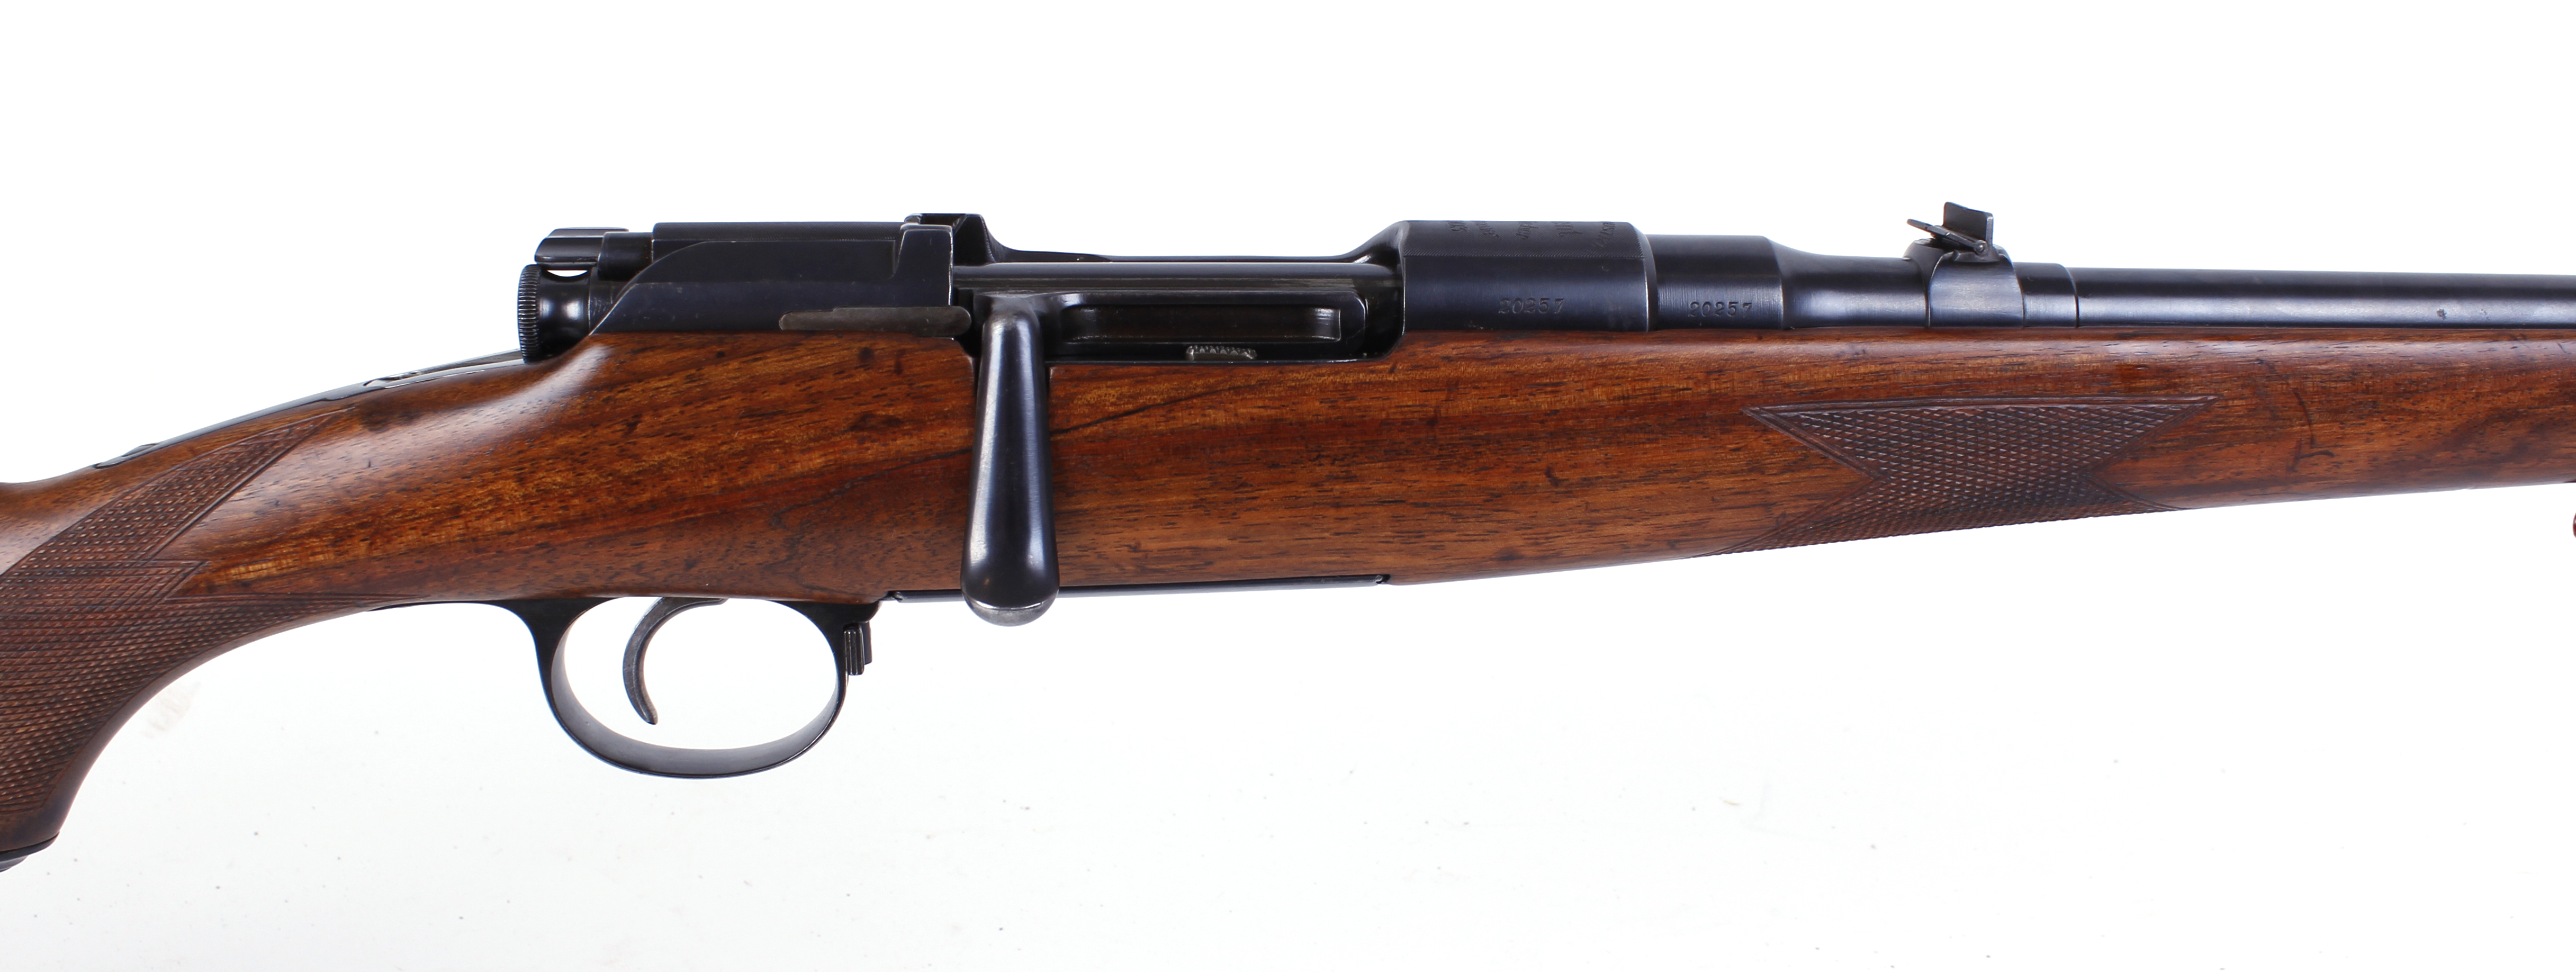 6.5 x 54 Steyr Mannlicher bolt action sporting rifle, 5 shot, 23½ ins barrel, blade and leaf sights, - Image 2 of 4